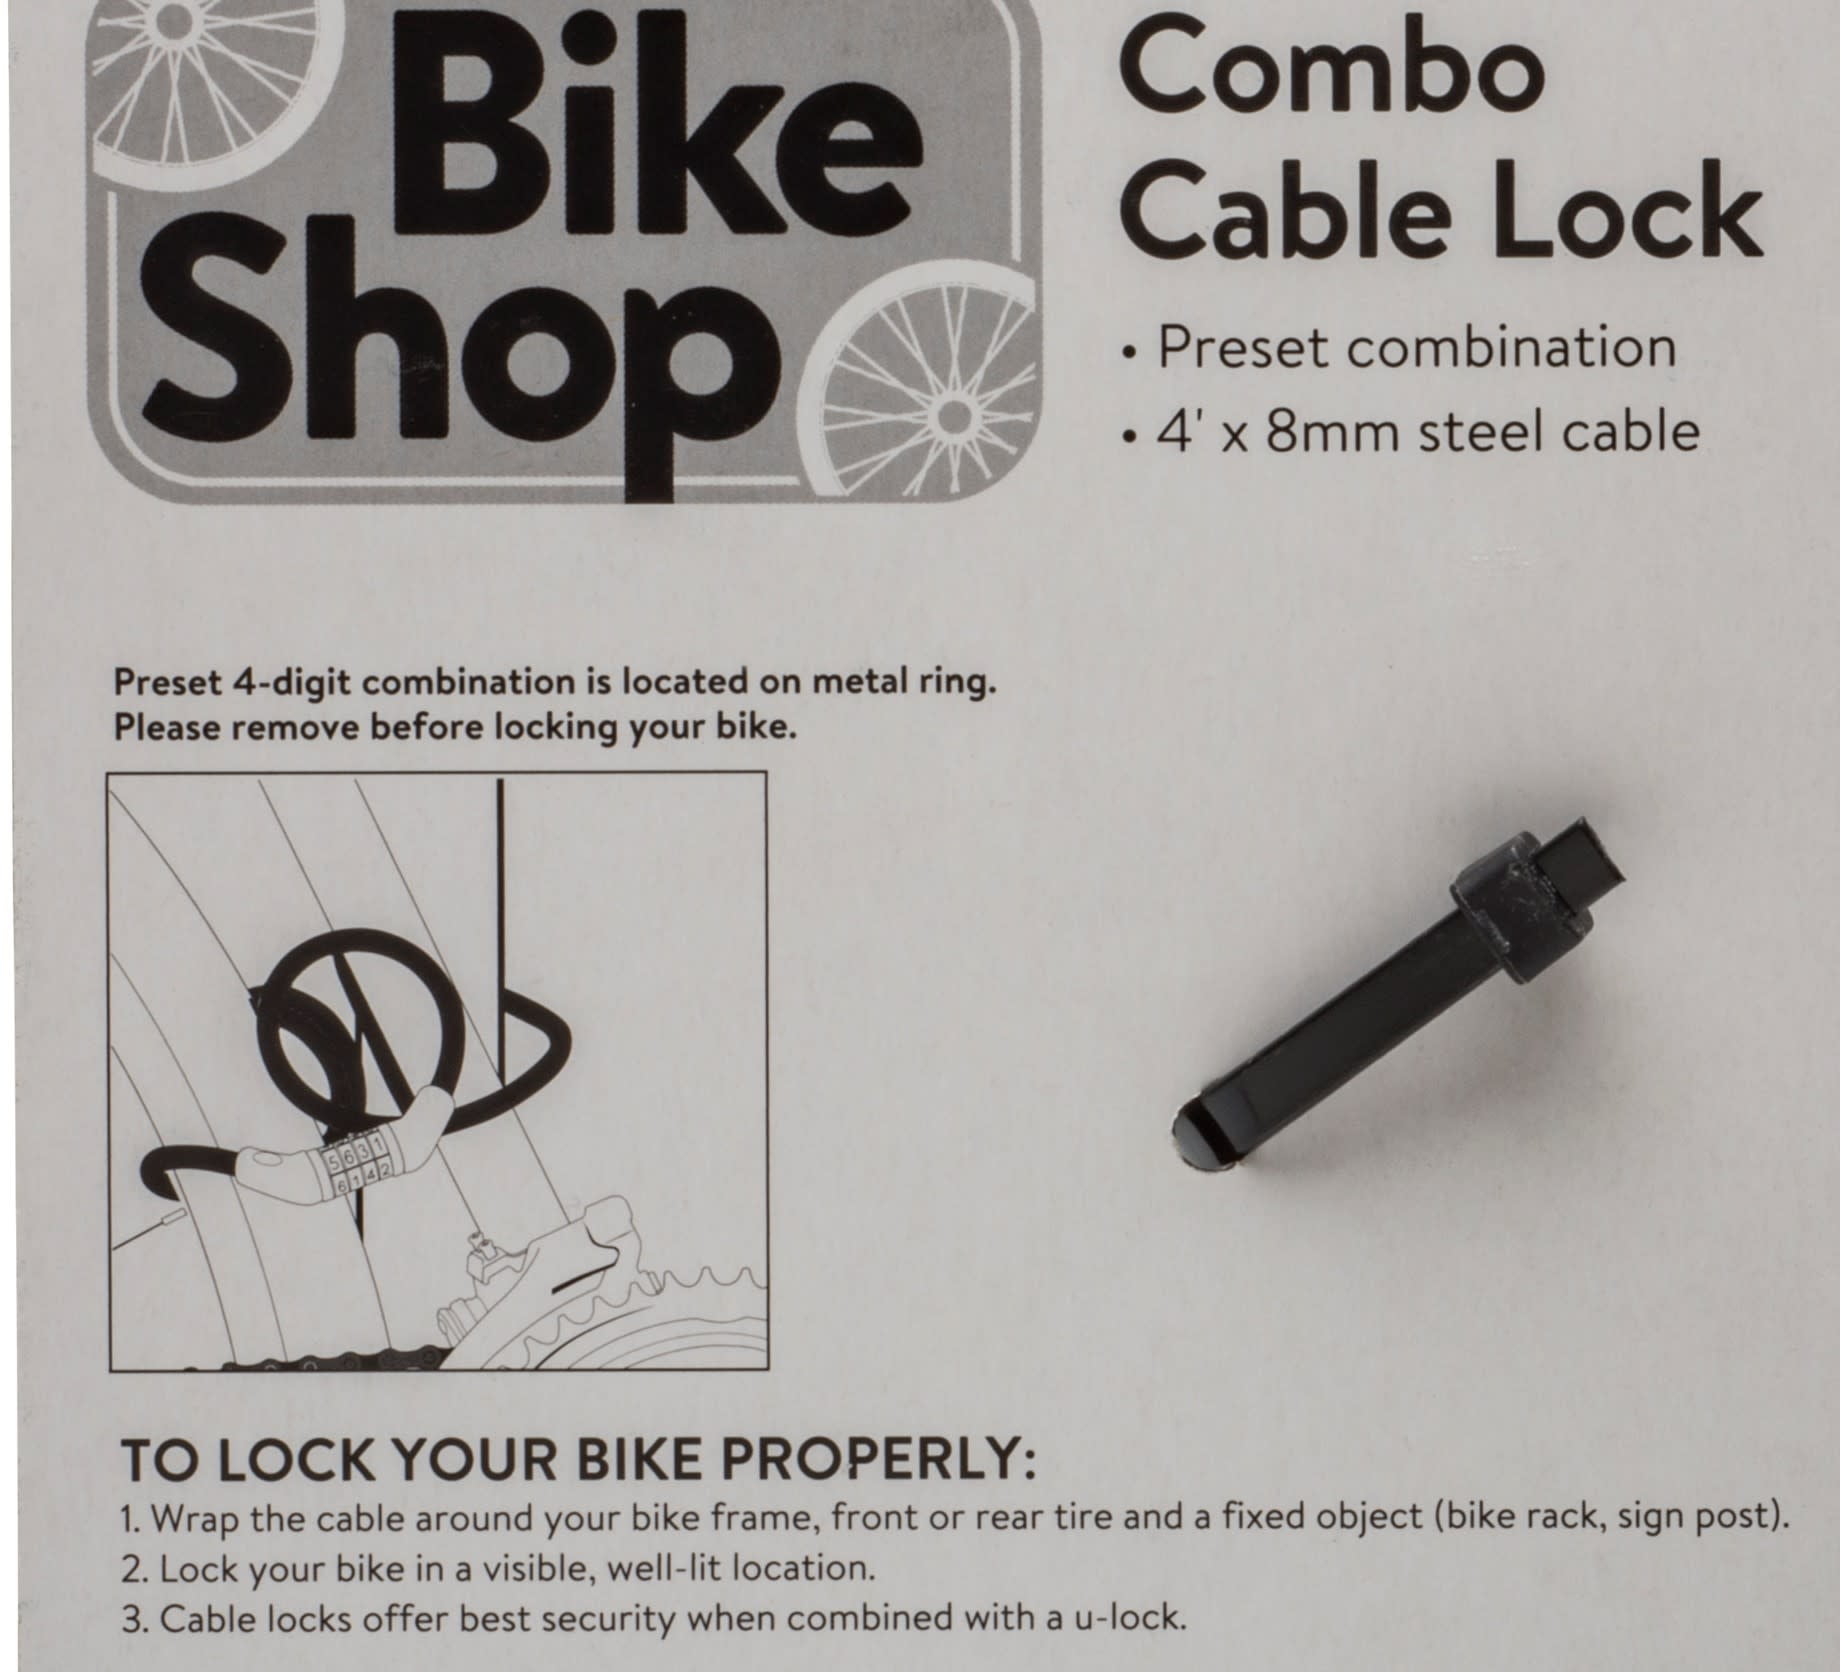 Bike Shop 4ft x 8mm Combo Cable Bike Lock